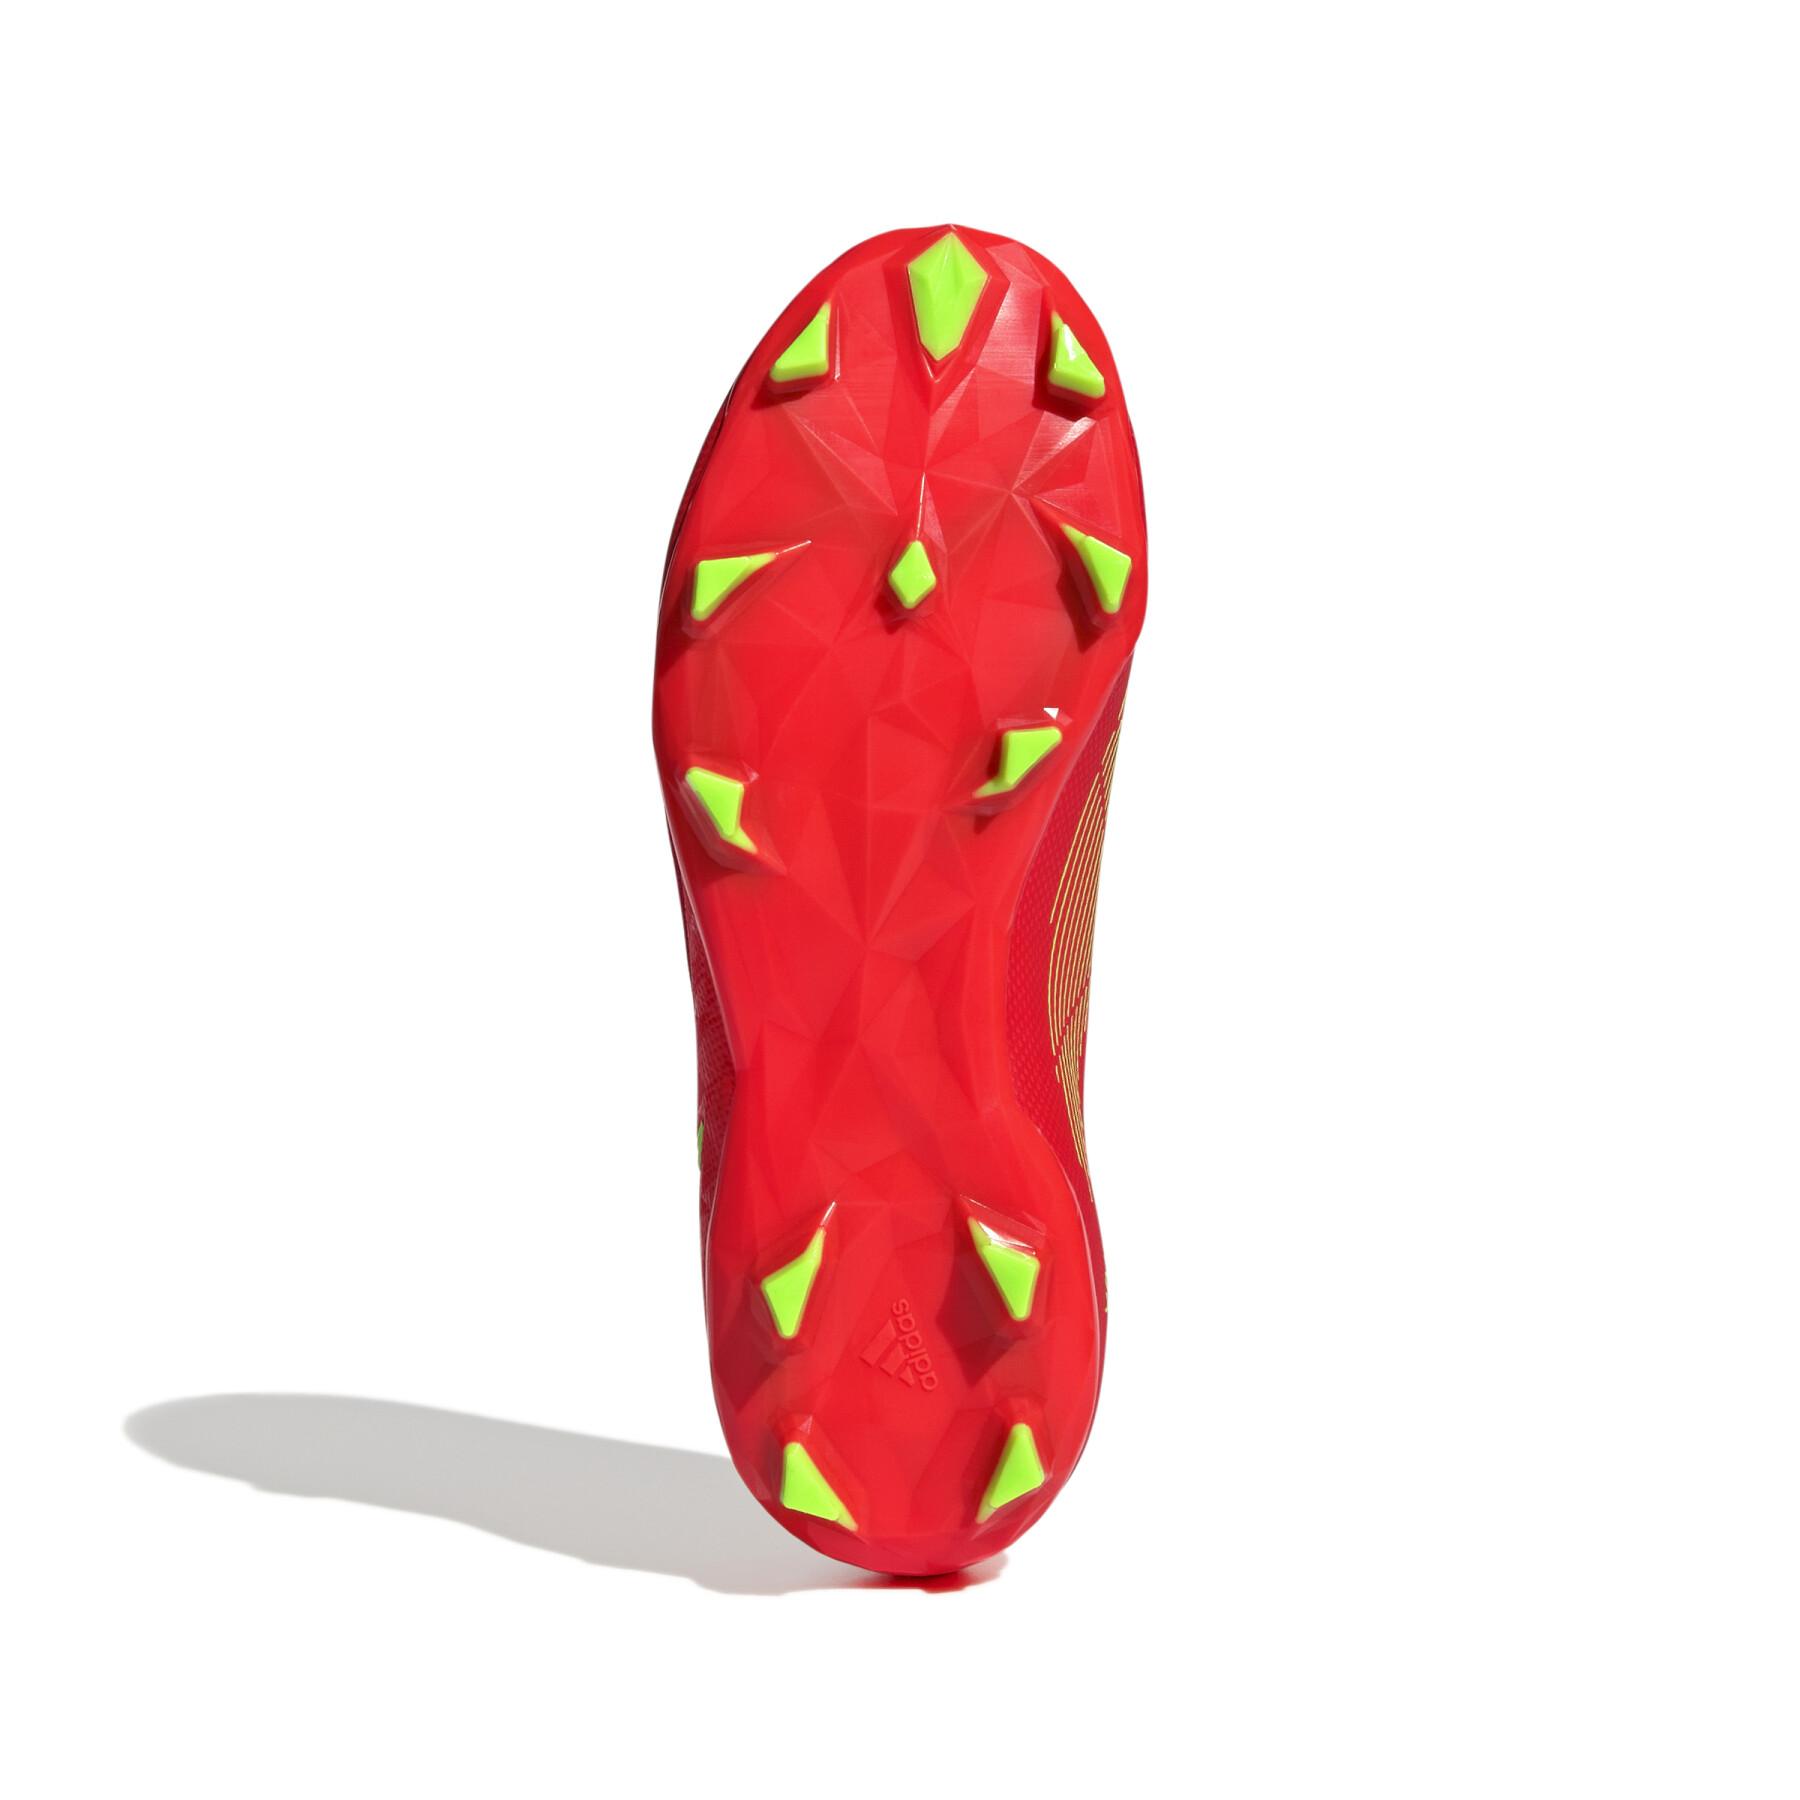 Children's soccer shoes adidas Predator Edge.3 Laceless FG - Game Data Pack